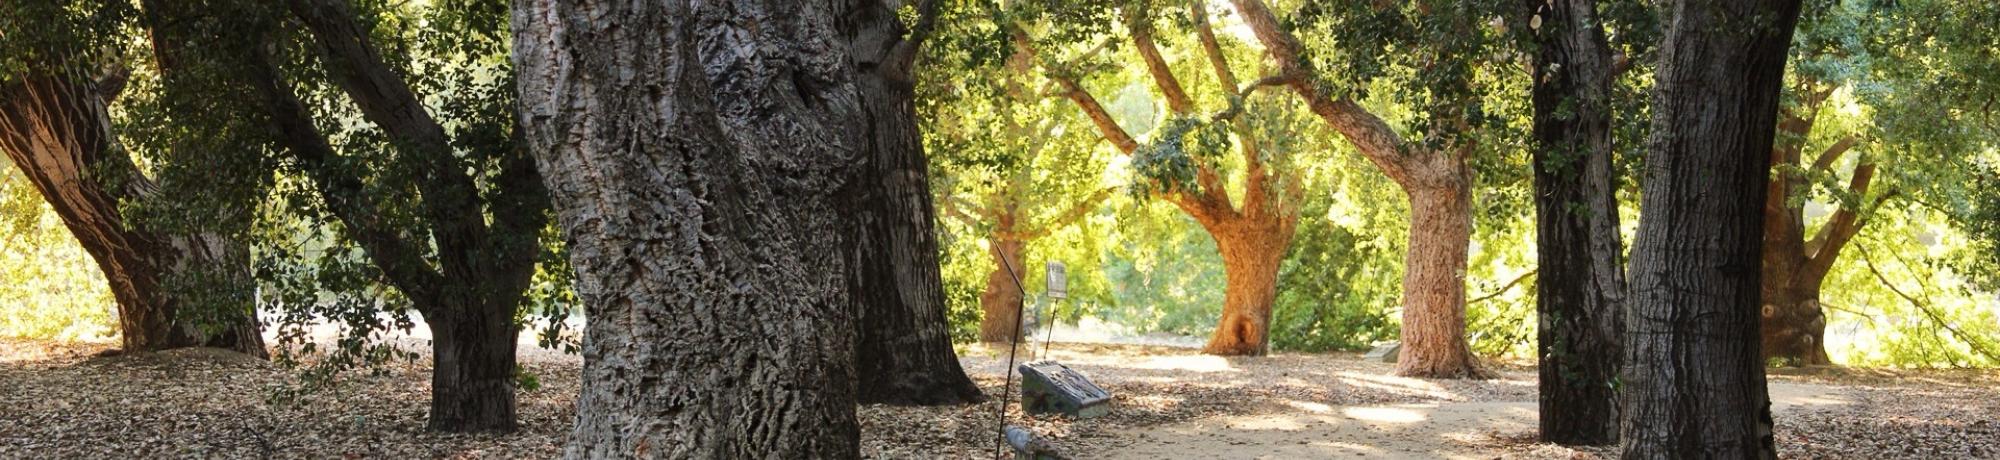 Image of the Peter J. Shields Oak Grove in the UC Davis Arboretum.